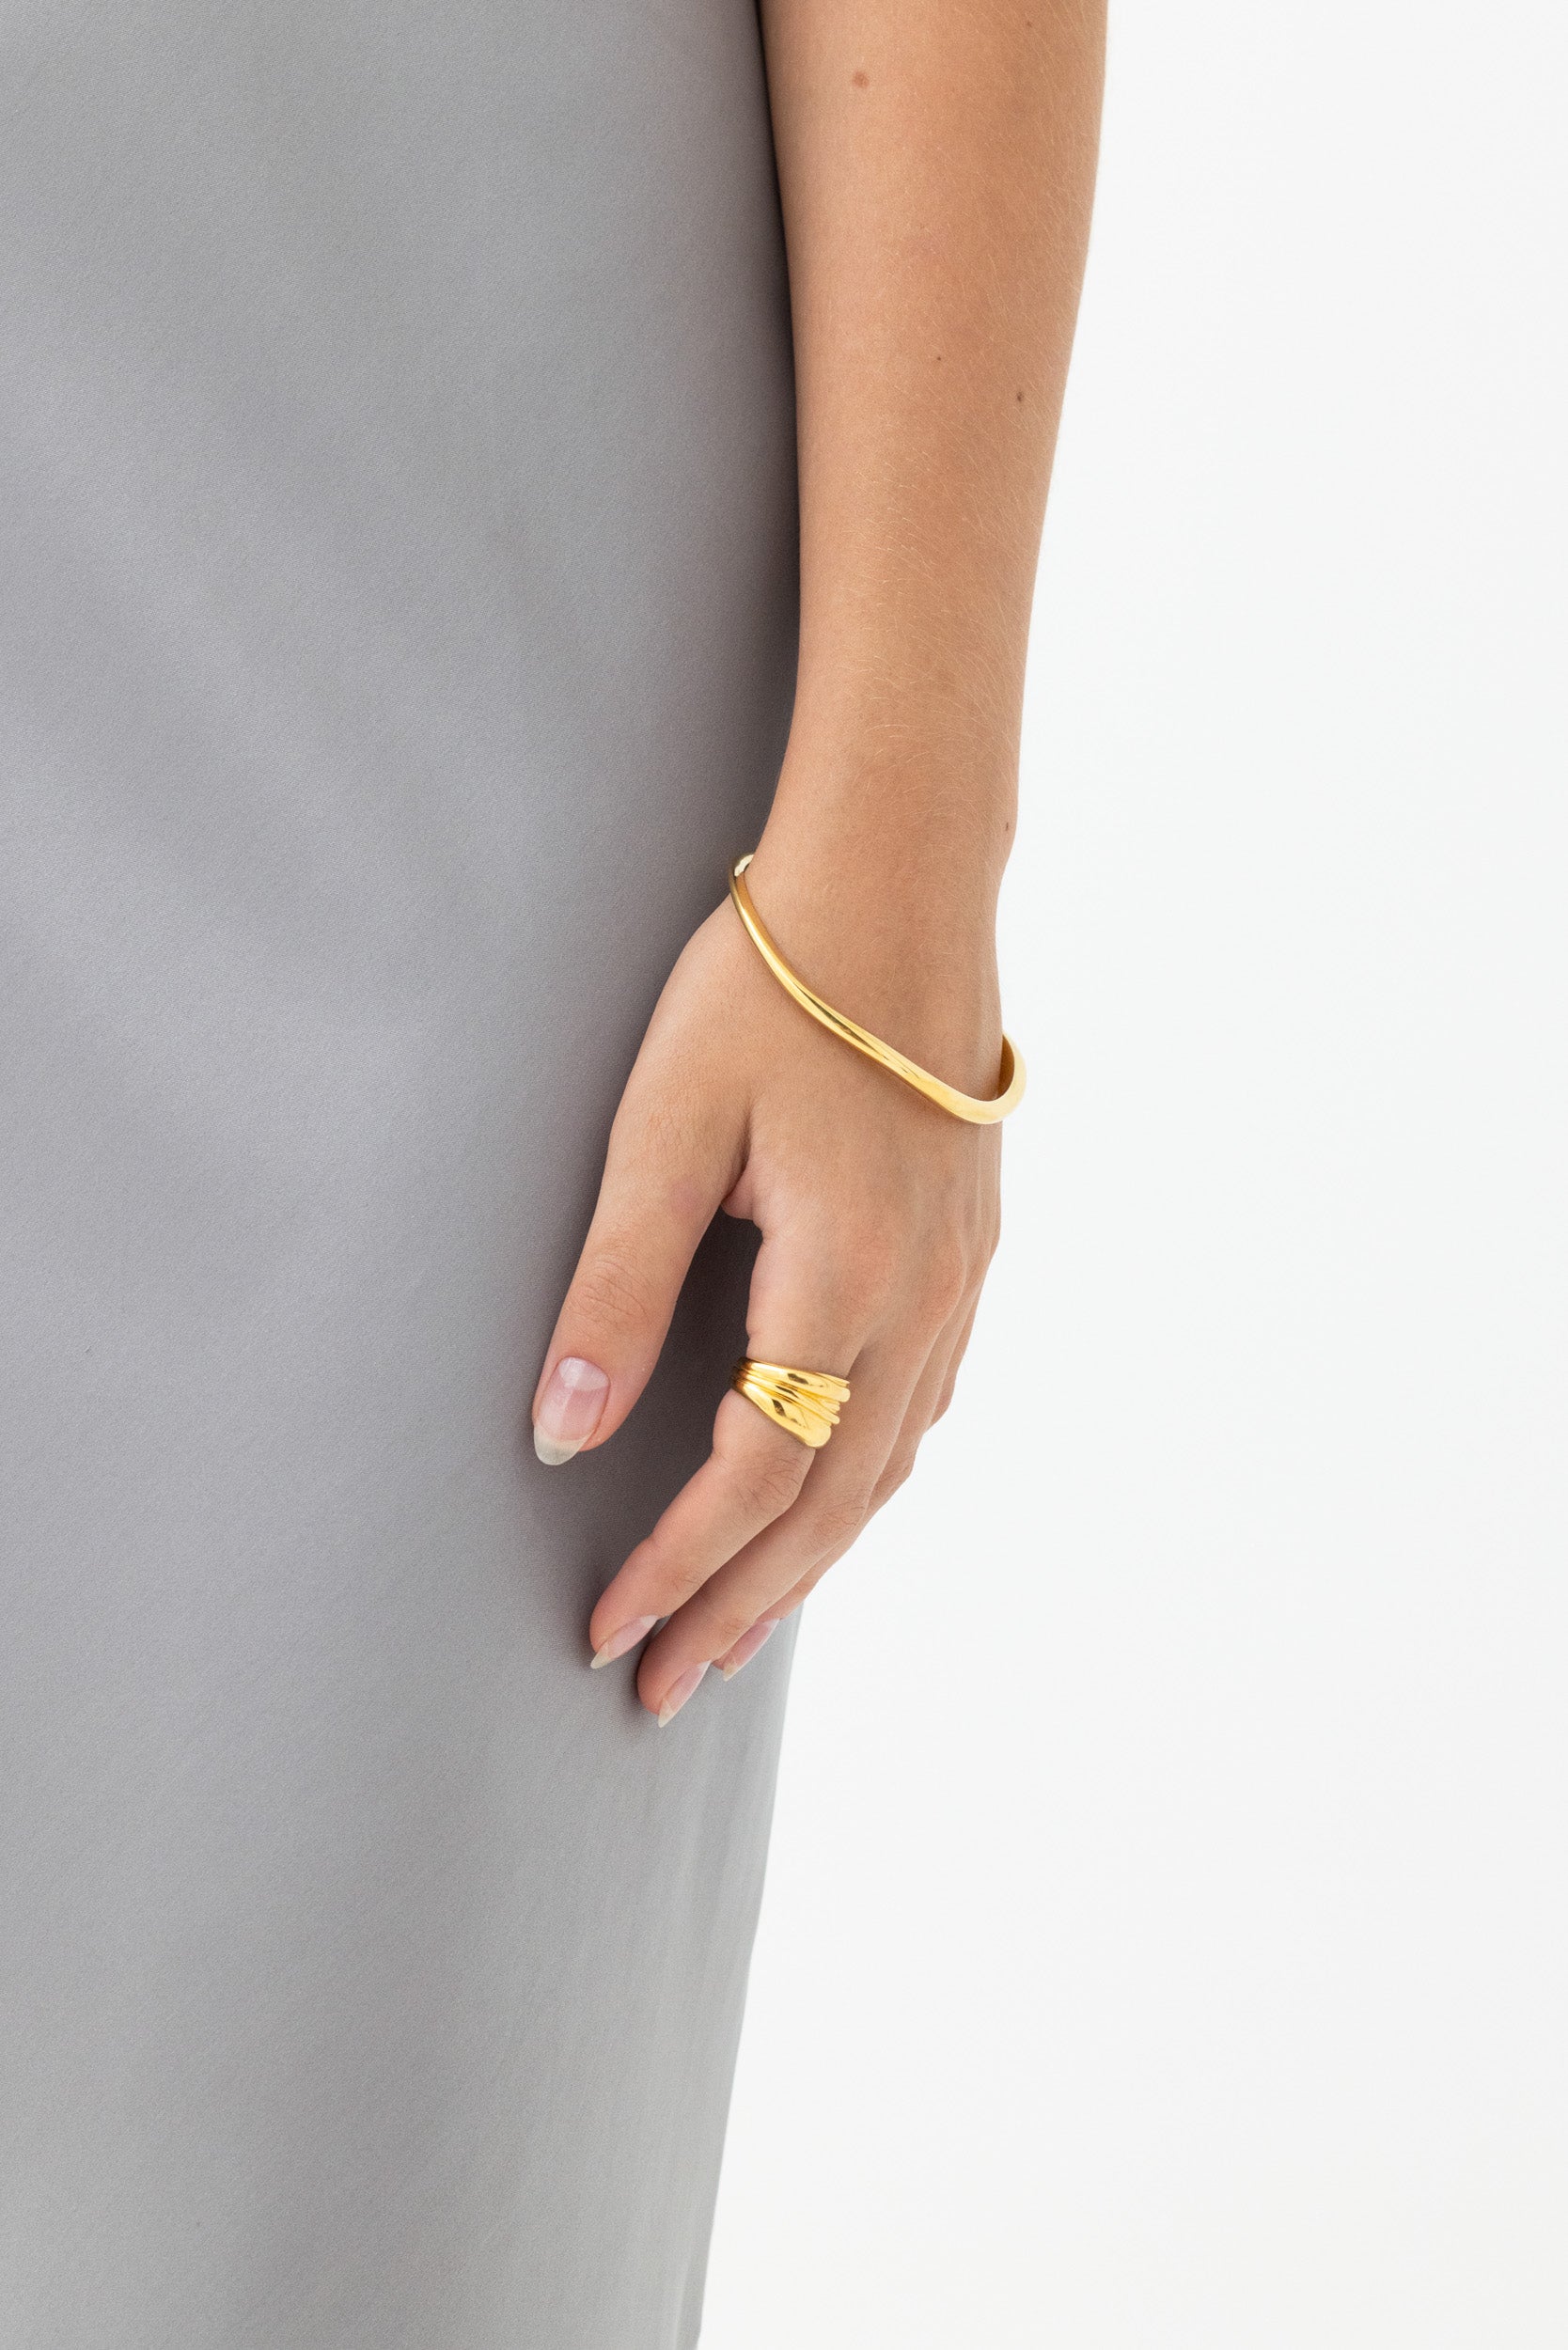 Model wearing Fundamental Bangle 14k Vermeil: Organic-shaped bracelet in recycled gold.